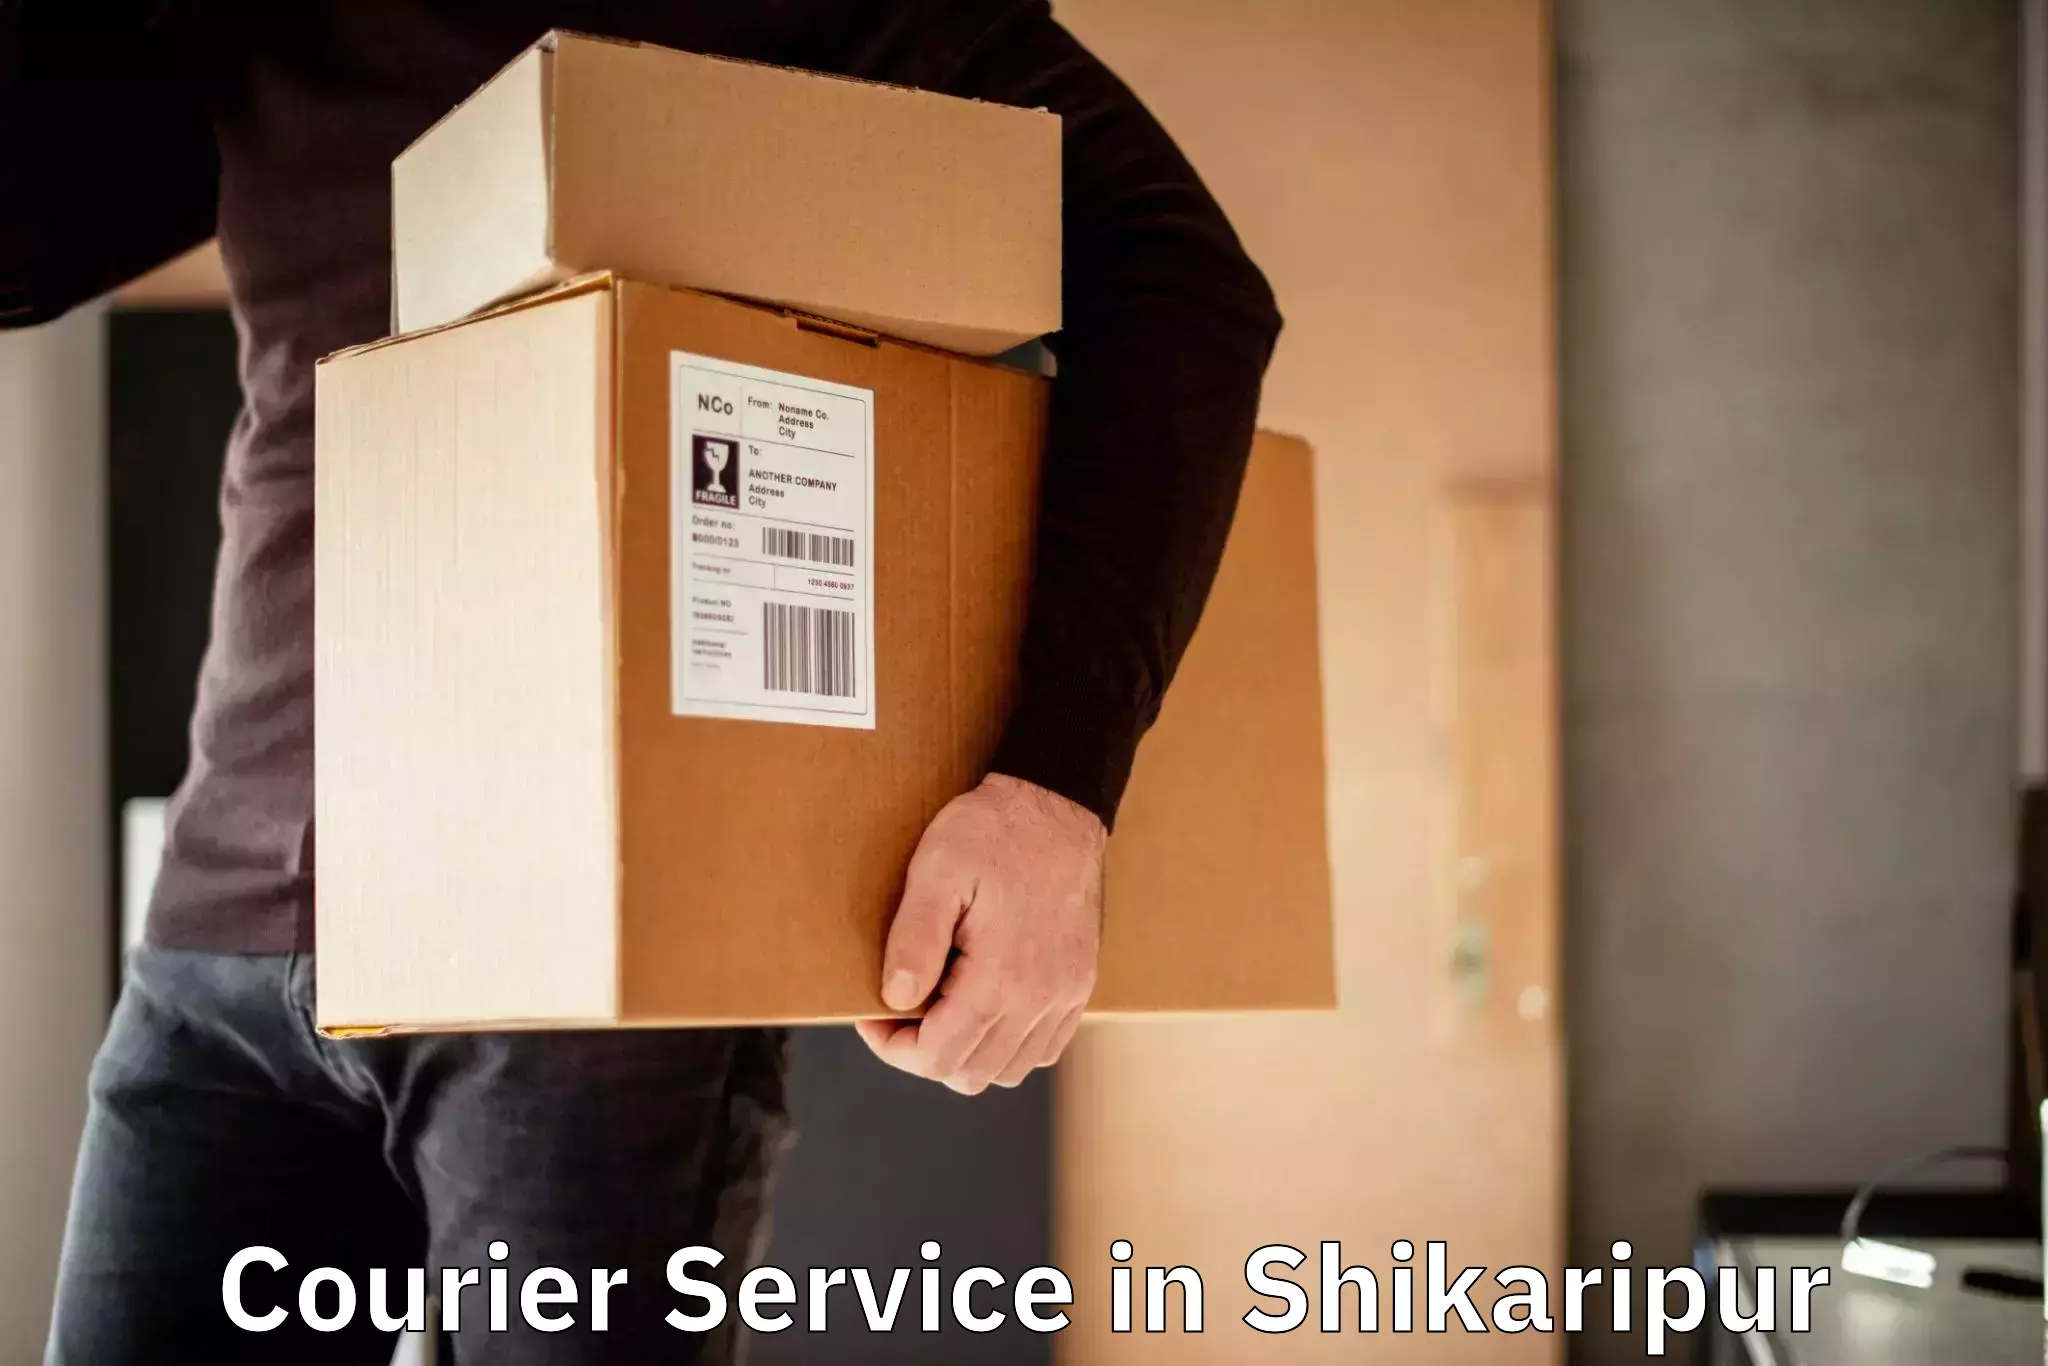 Logistics solutions in Shikaripur